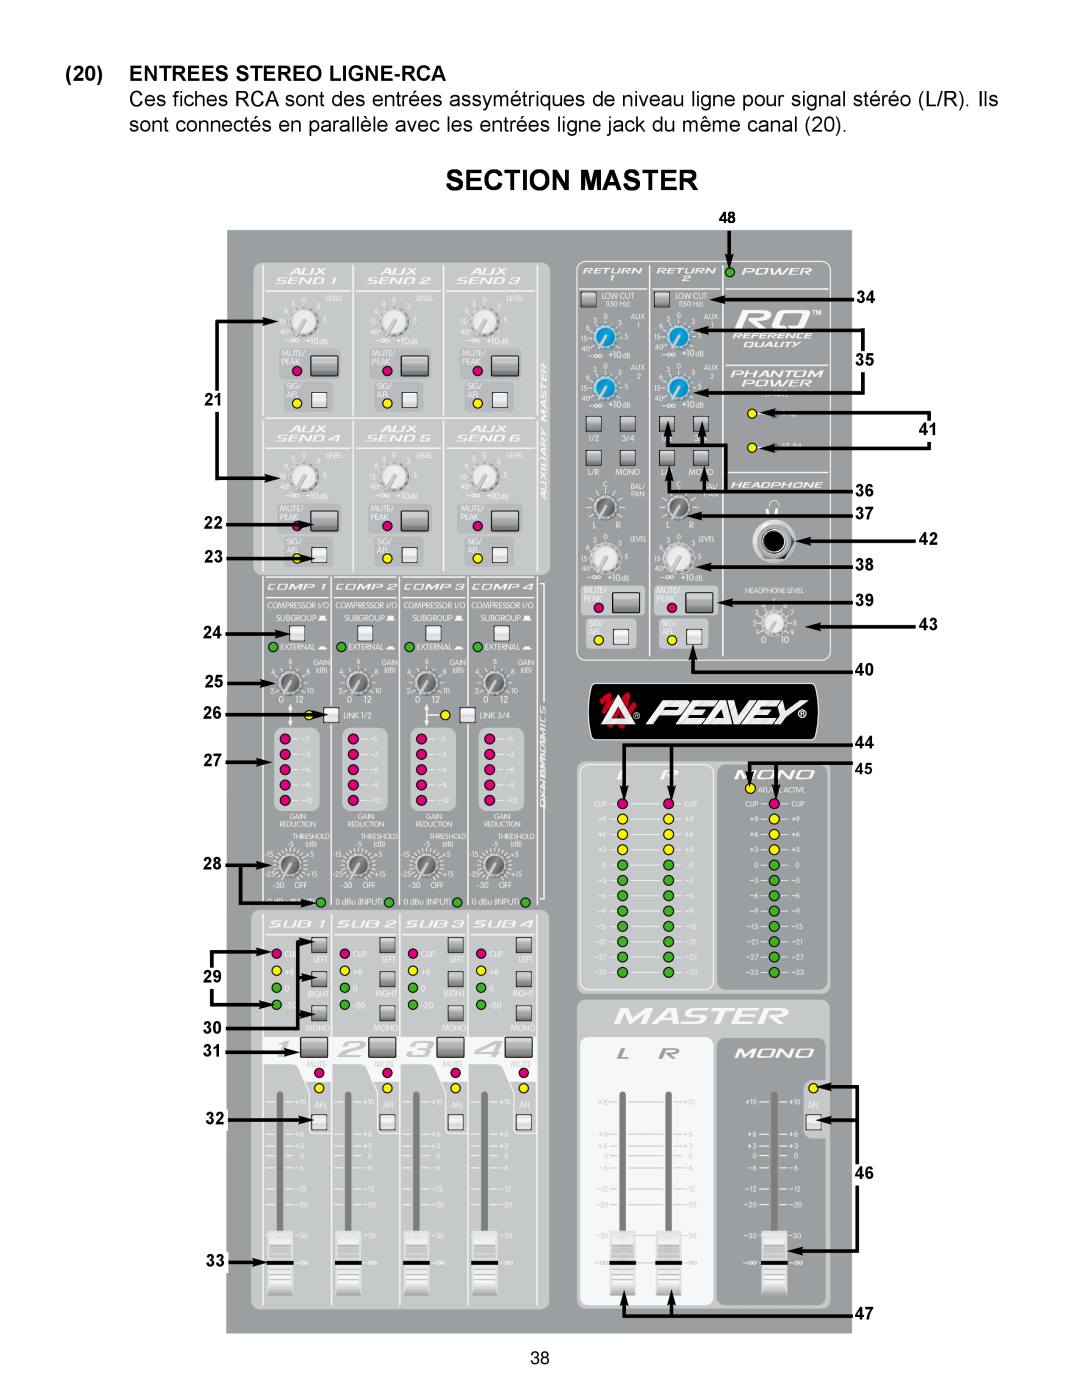 Peavey RQ 4300 Series manual Section Master, Entrees Stereo Ligne-Rca, 31 1 2 3, L R Mono, Dynamicsdynamics 